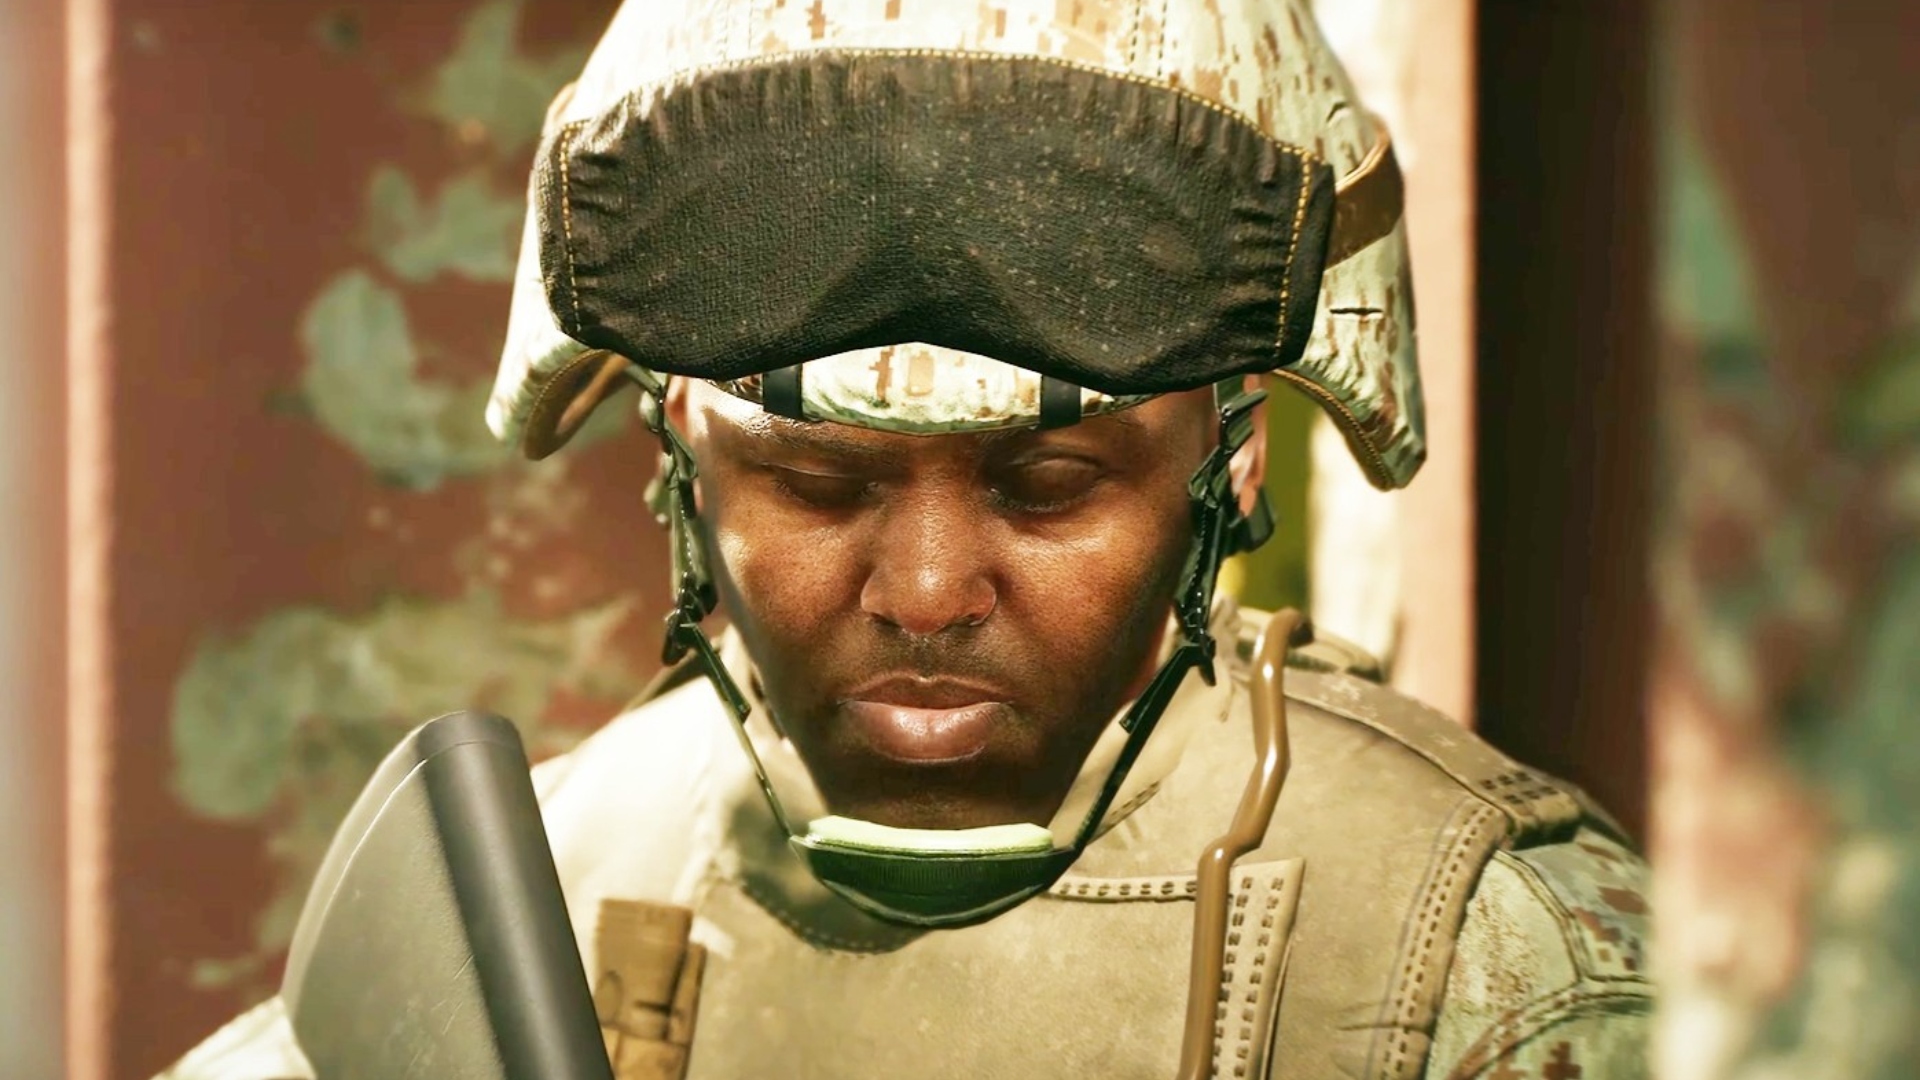 Six Days in Fallujah release date confirmed